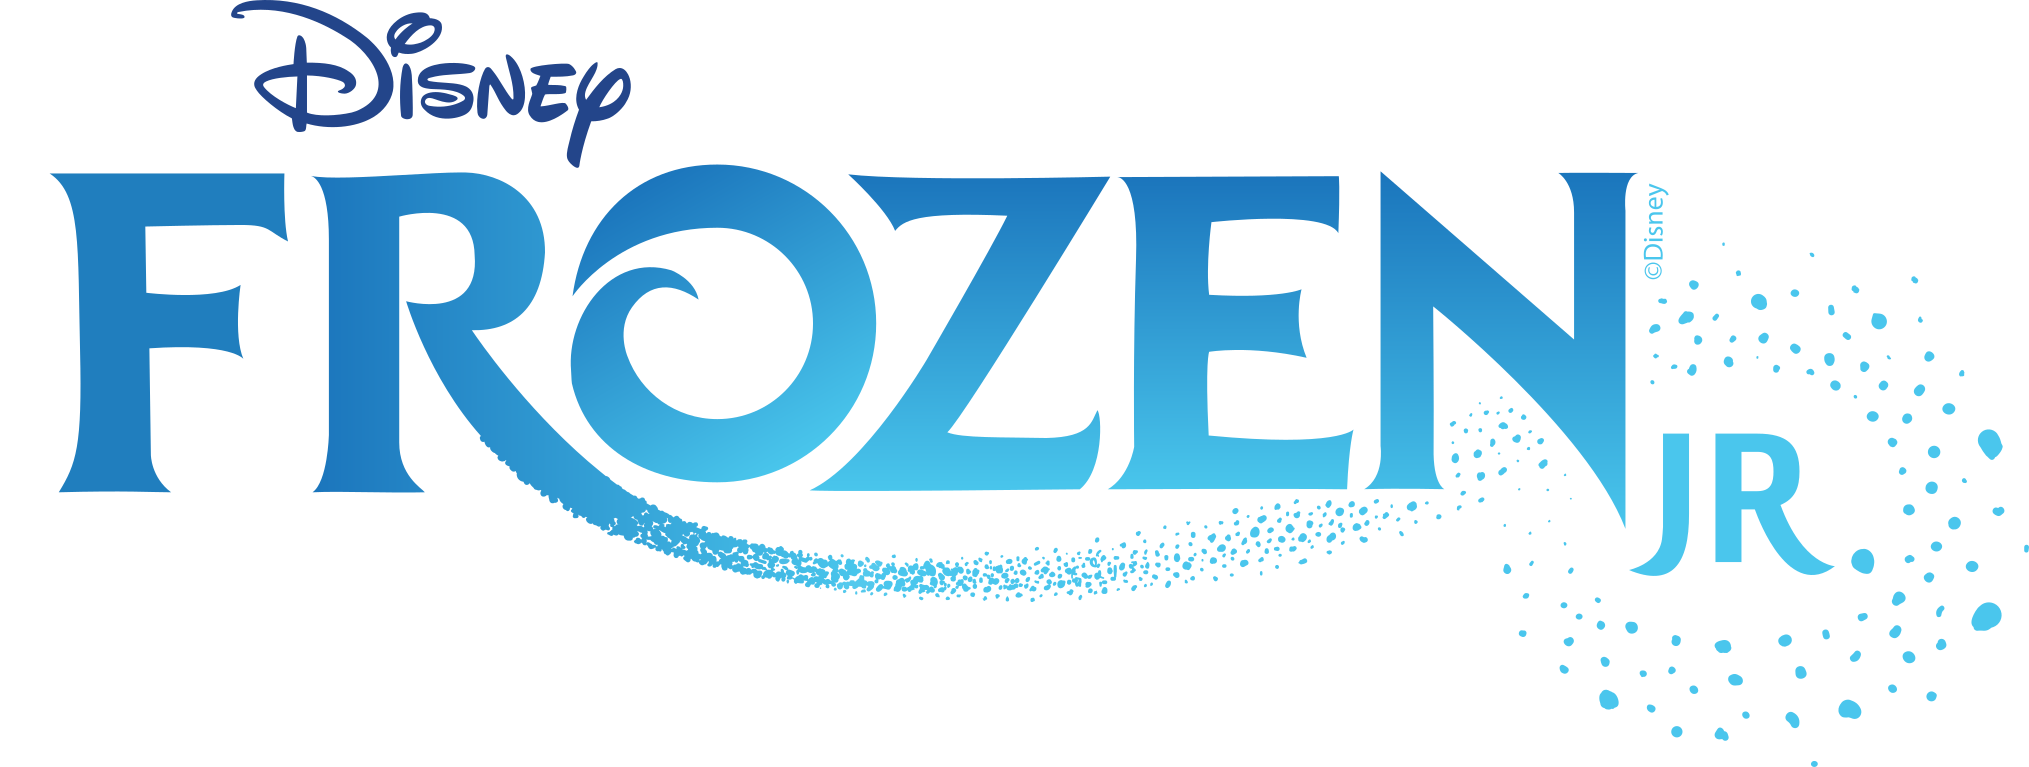 Frozen the Broadway Musical Logo Water Bottle - Frozen